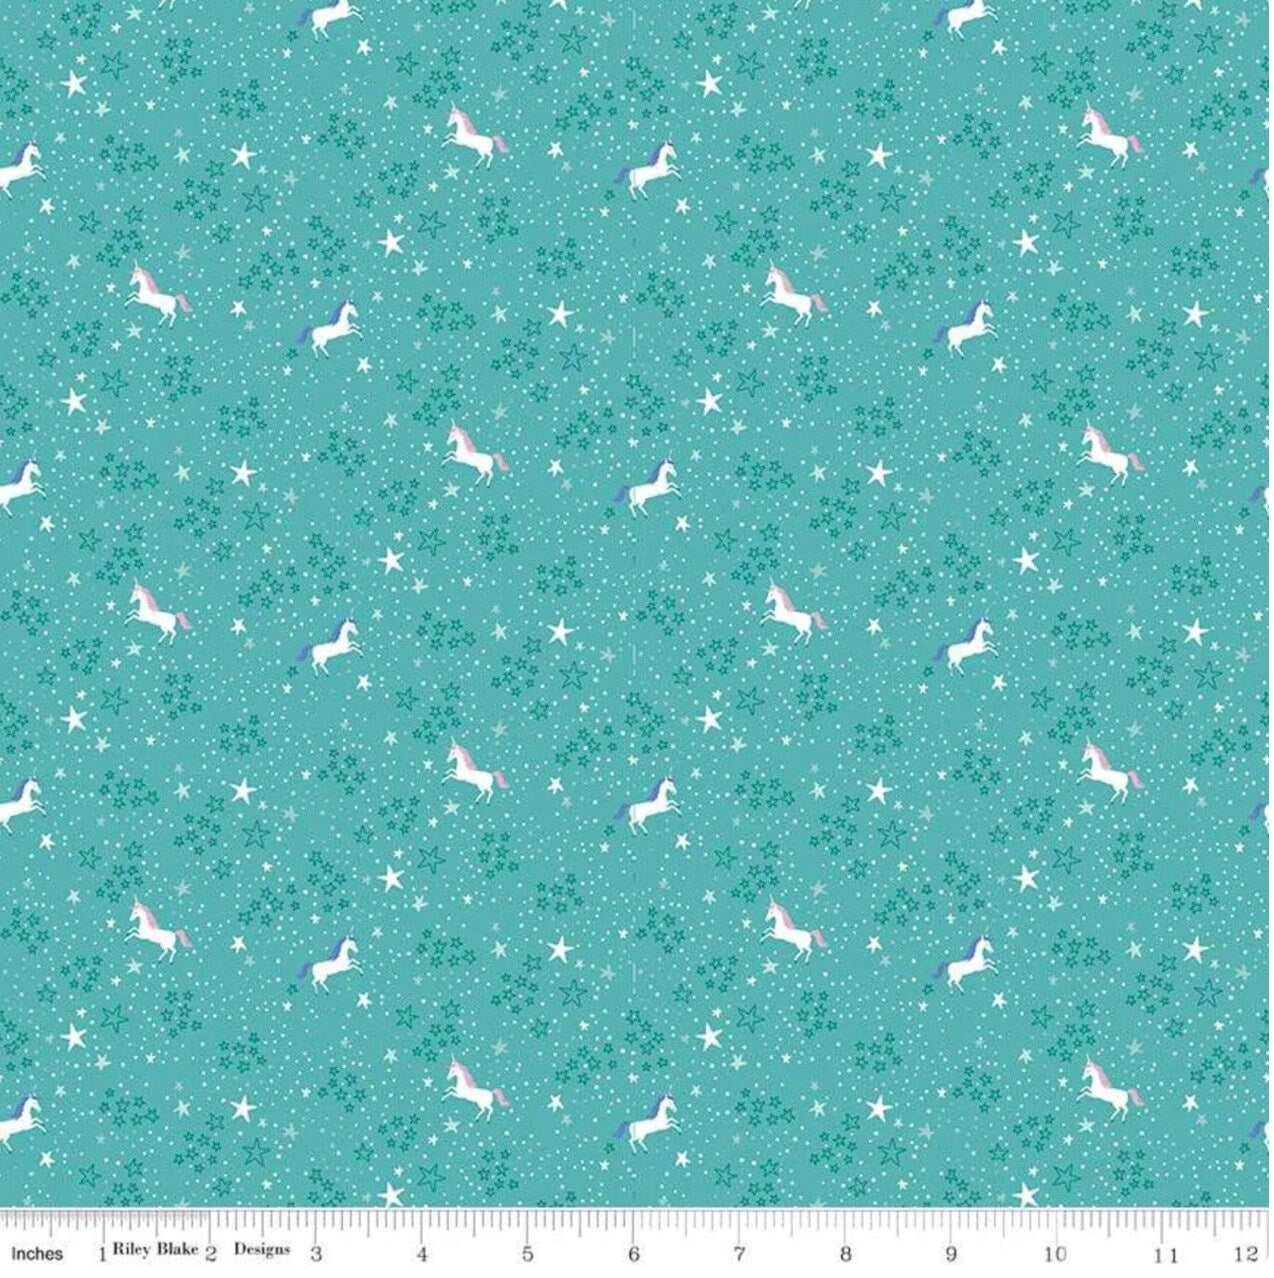 My Unicorn Starry Night Teal - LAMINATED Cotton Fabric - Riley Blake